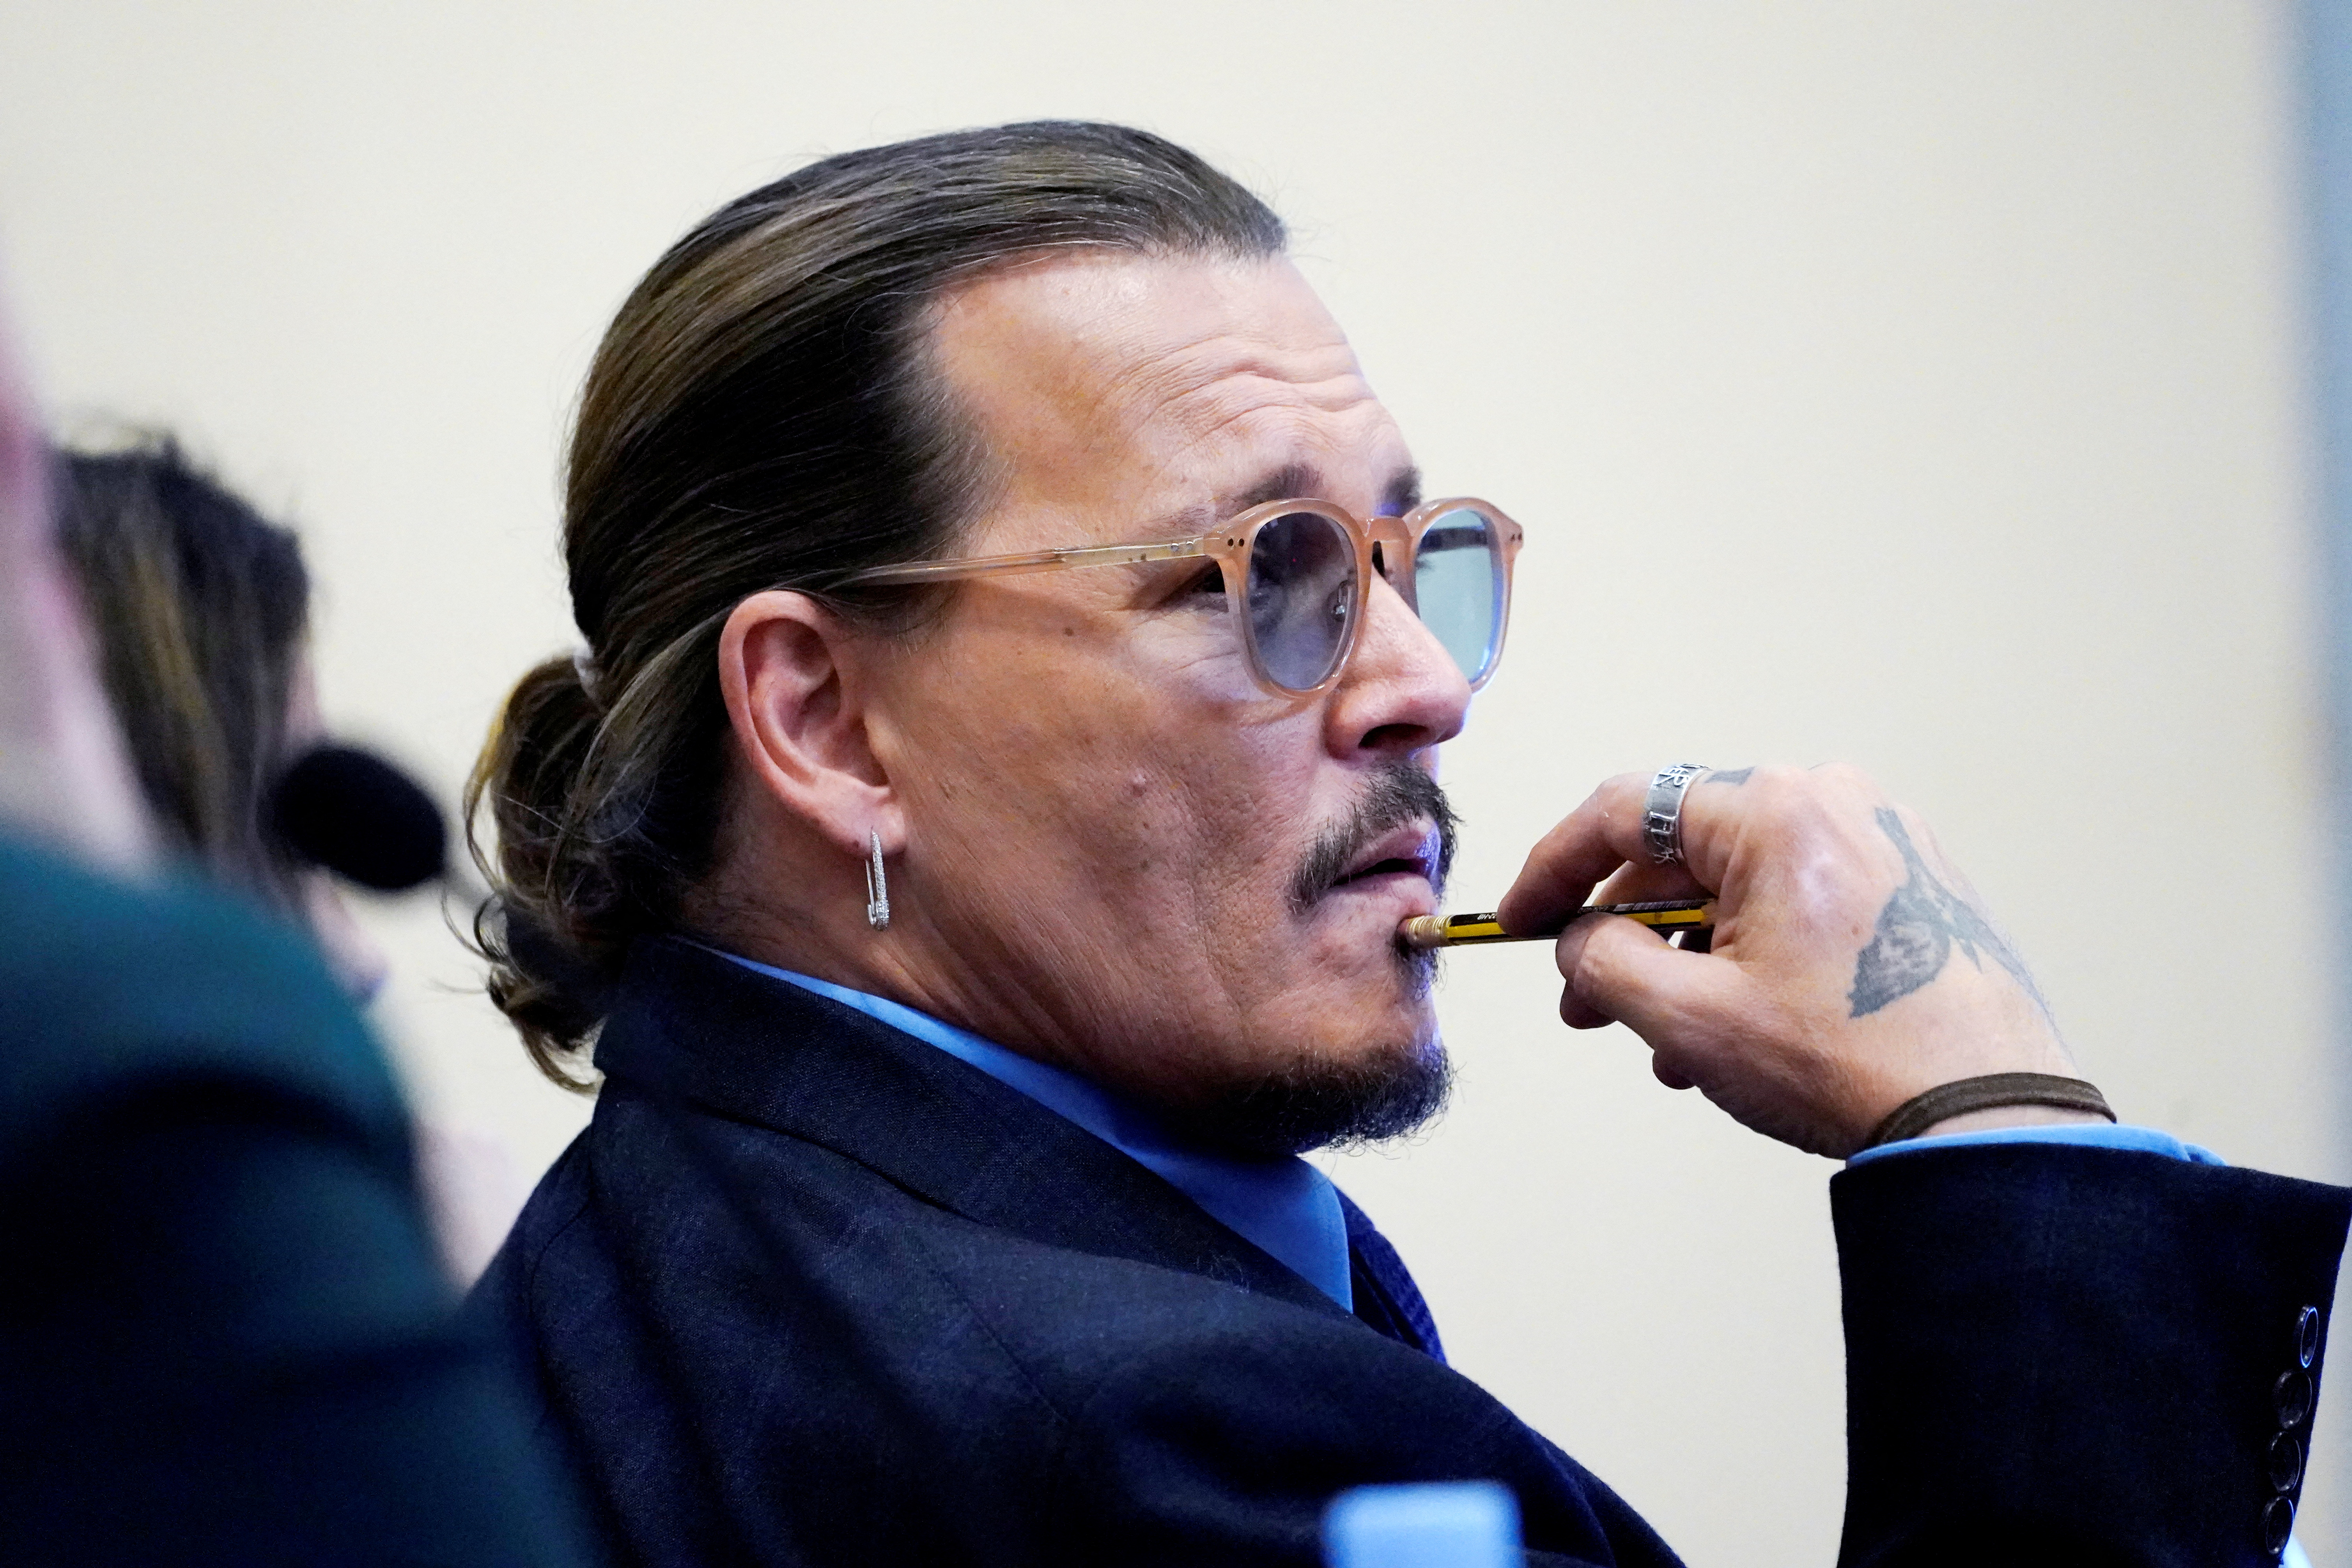 Johnny Depp during the trial (Steve Helber/REUTERS)